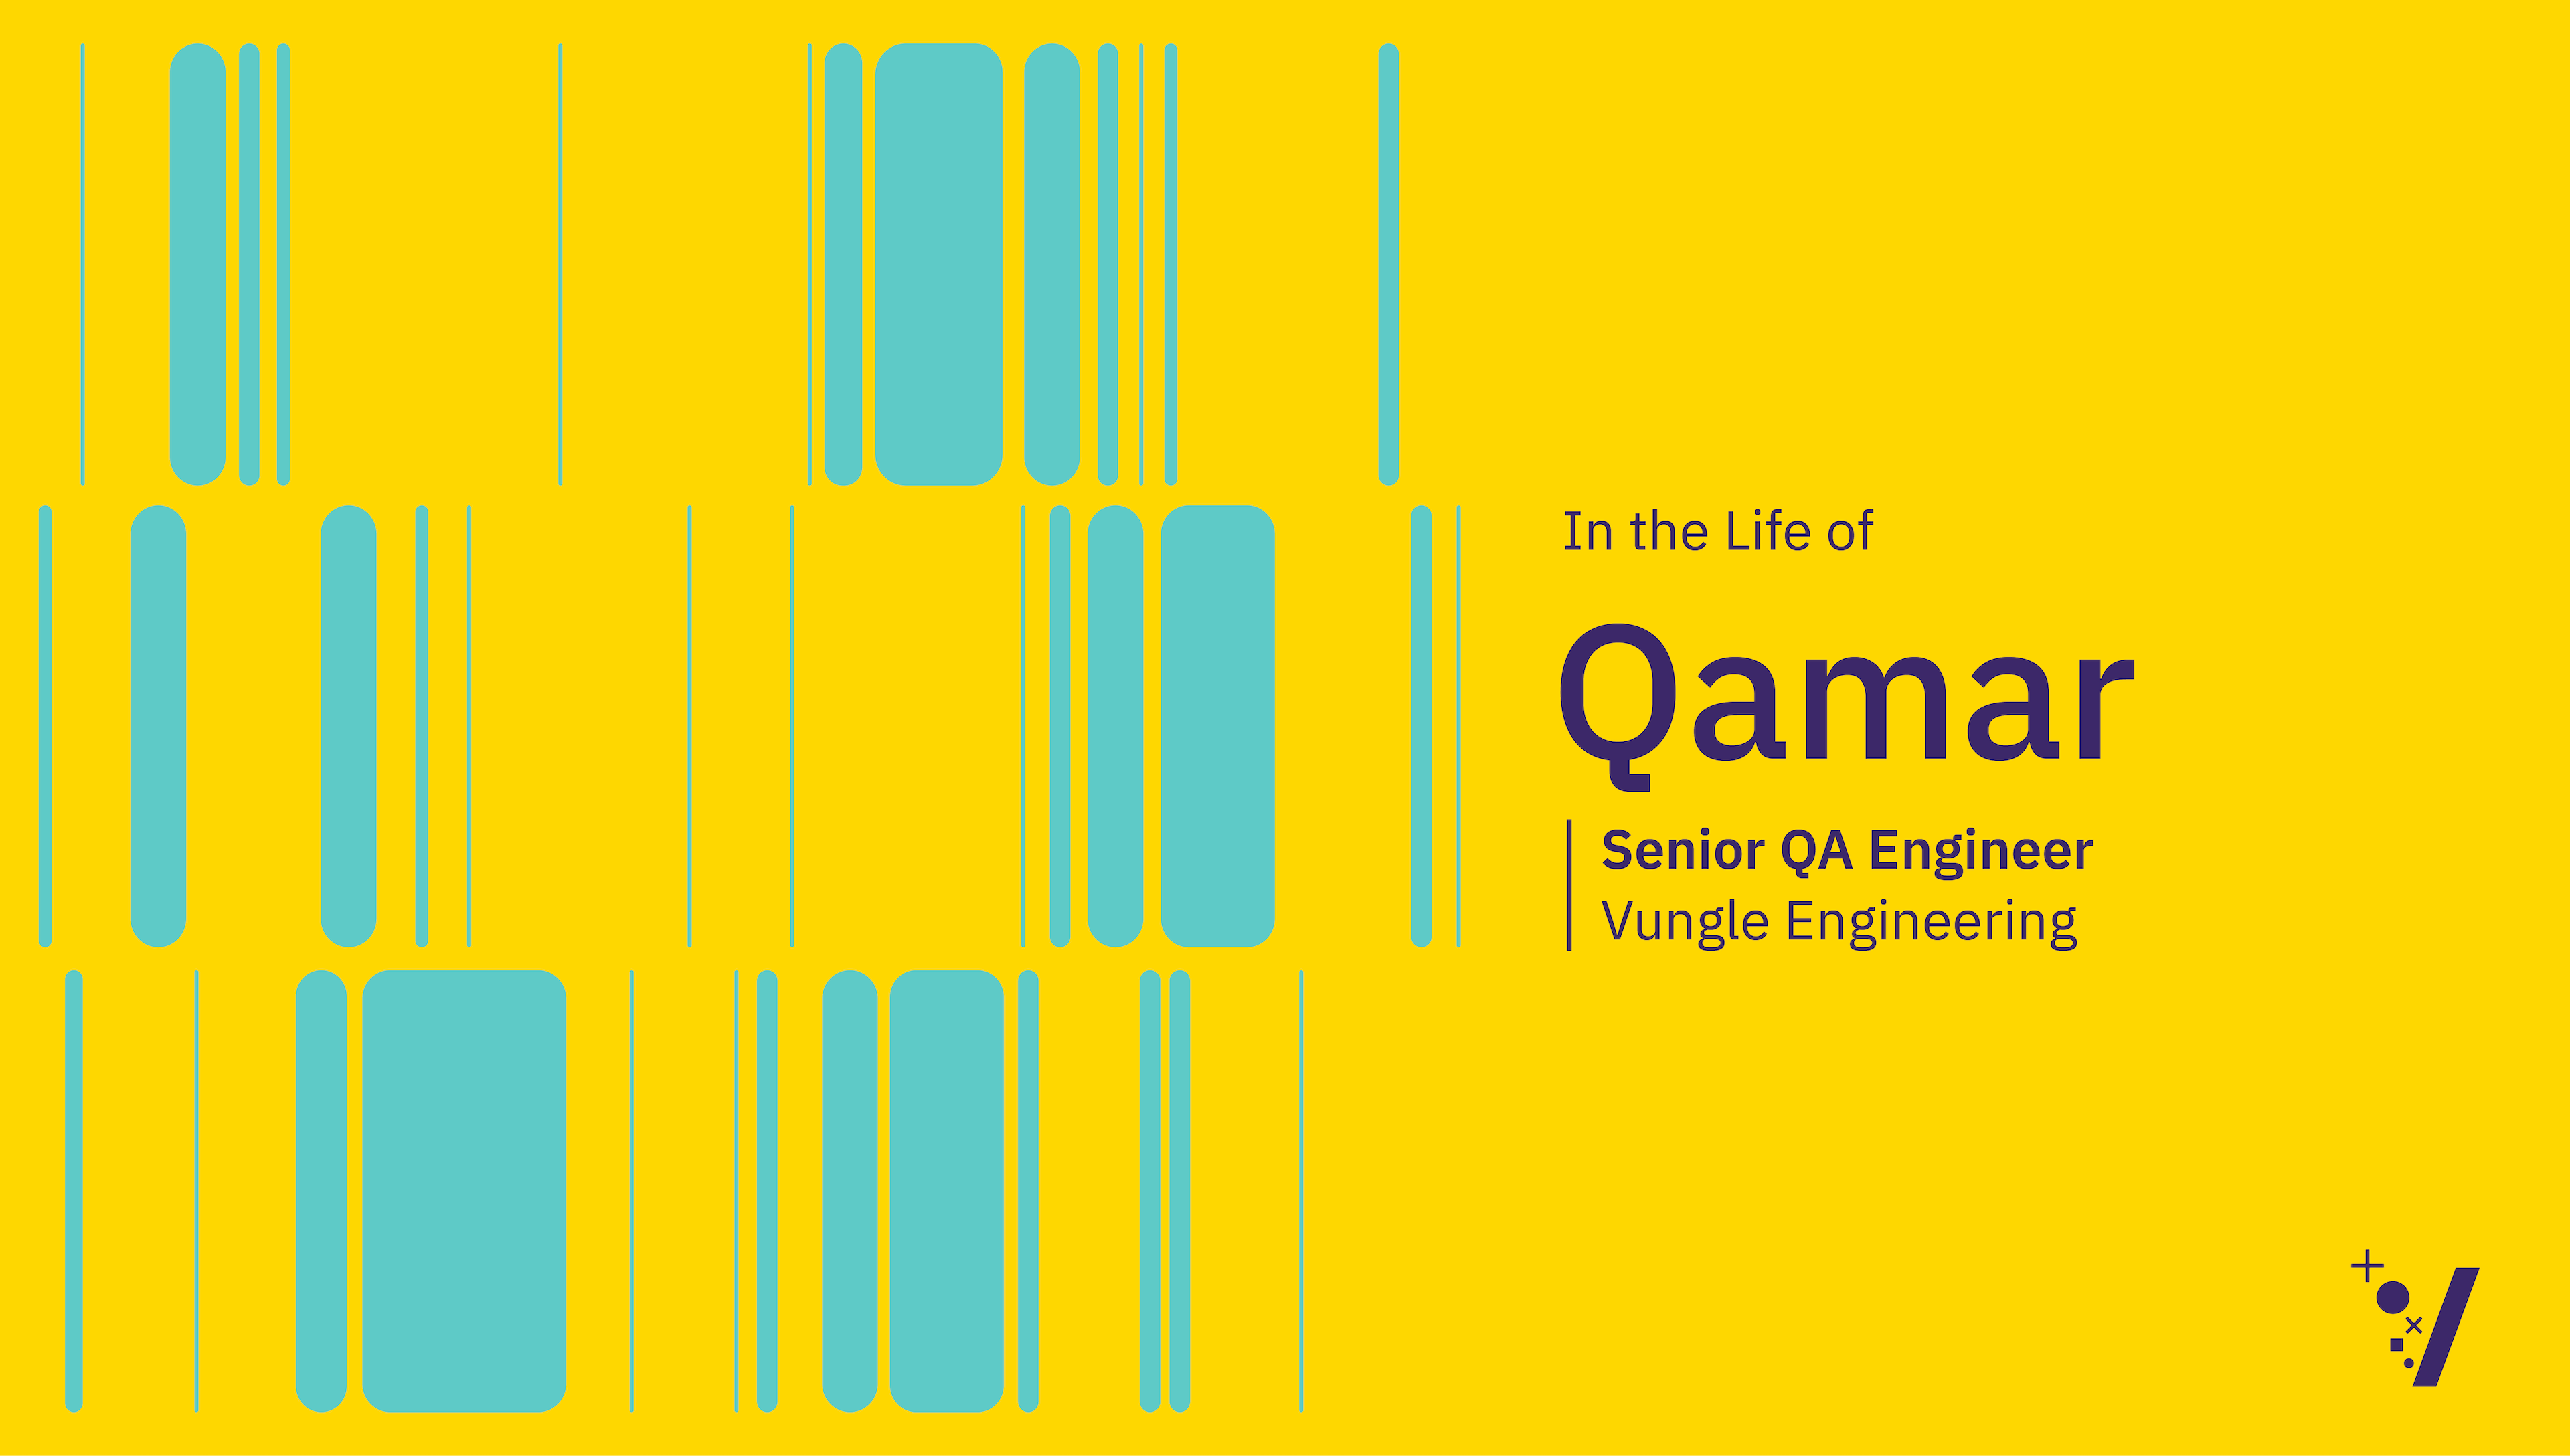 Life of a QA Automation Engineer With Qamar